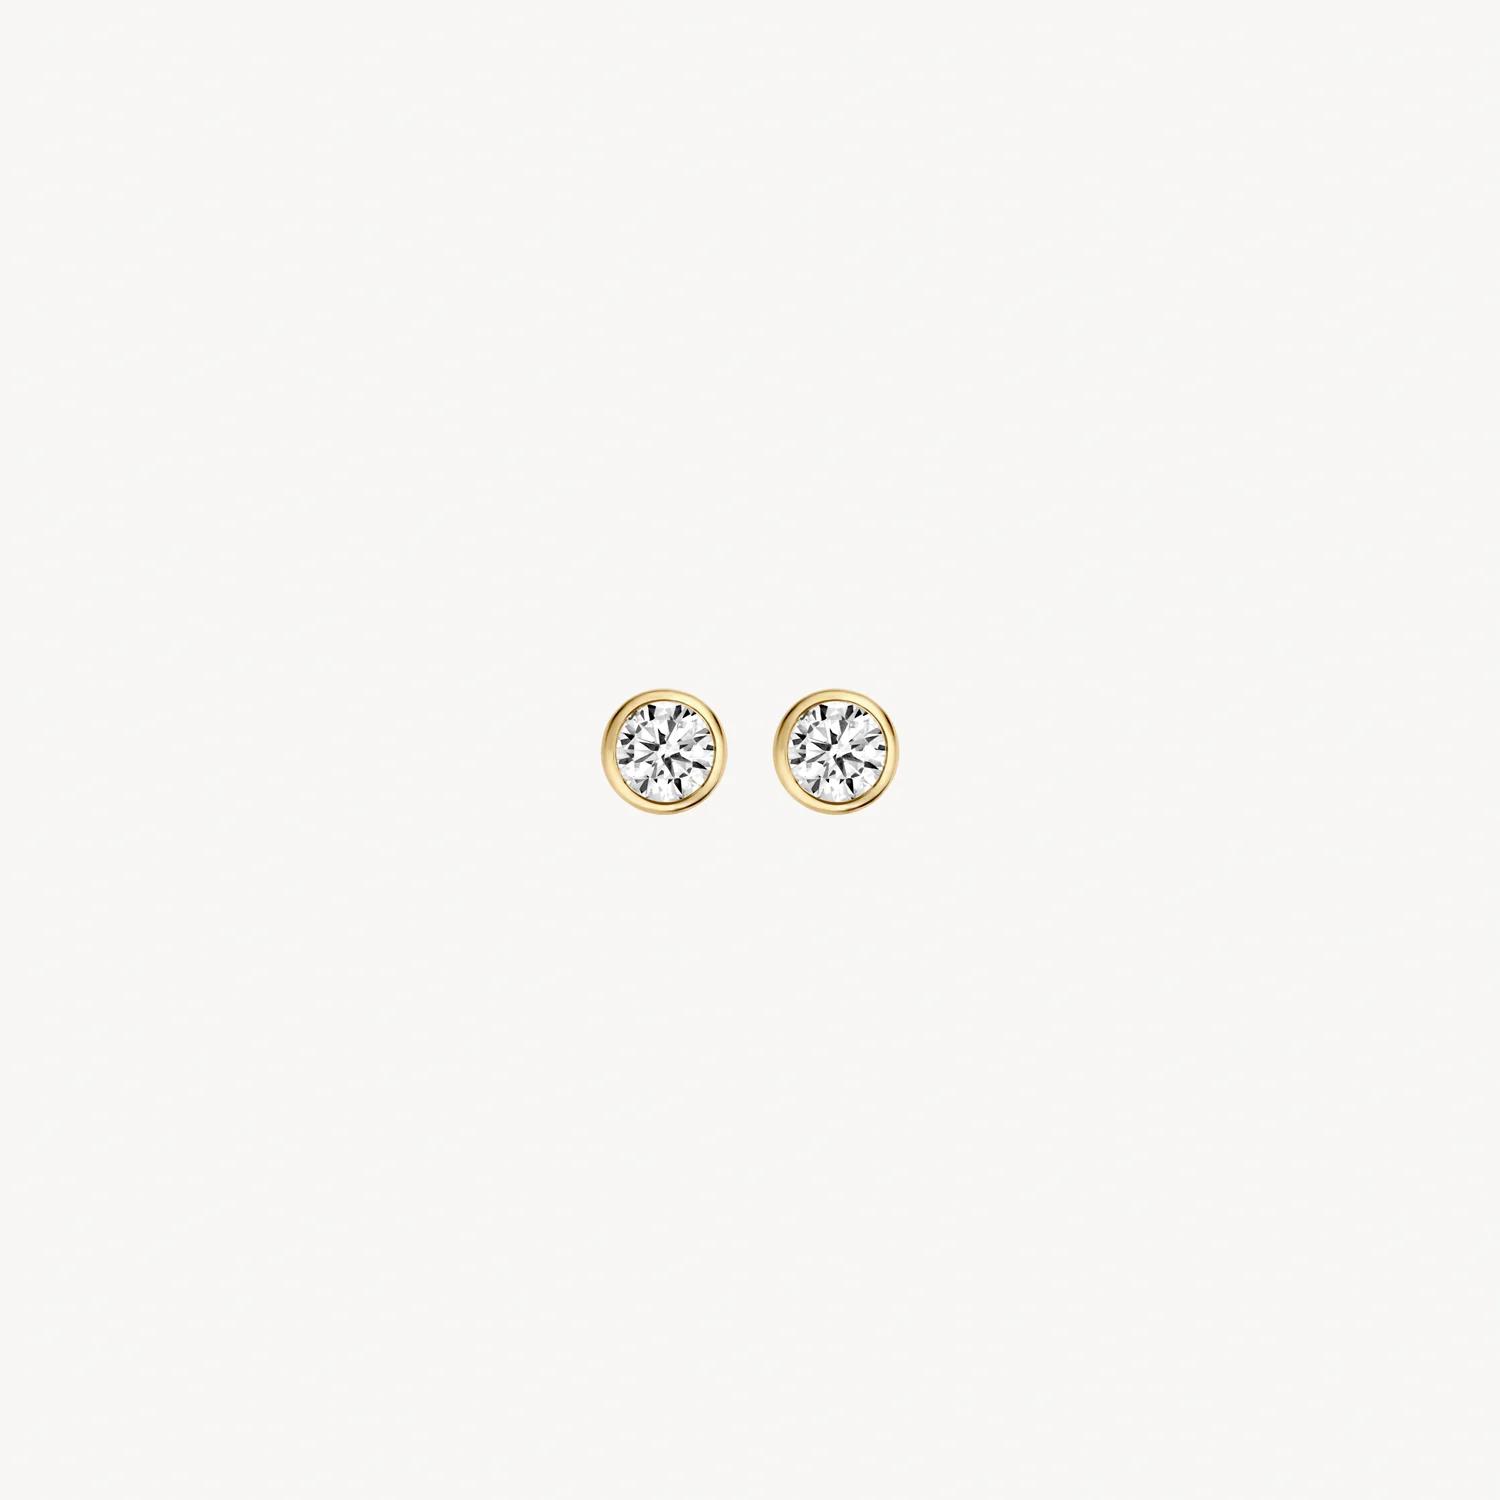 Blush Gold & CZ Stud Earrings - Small